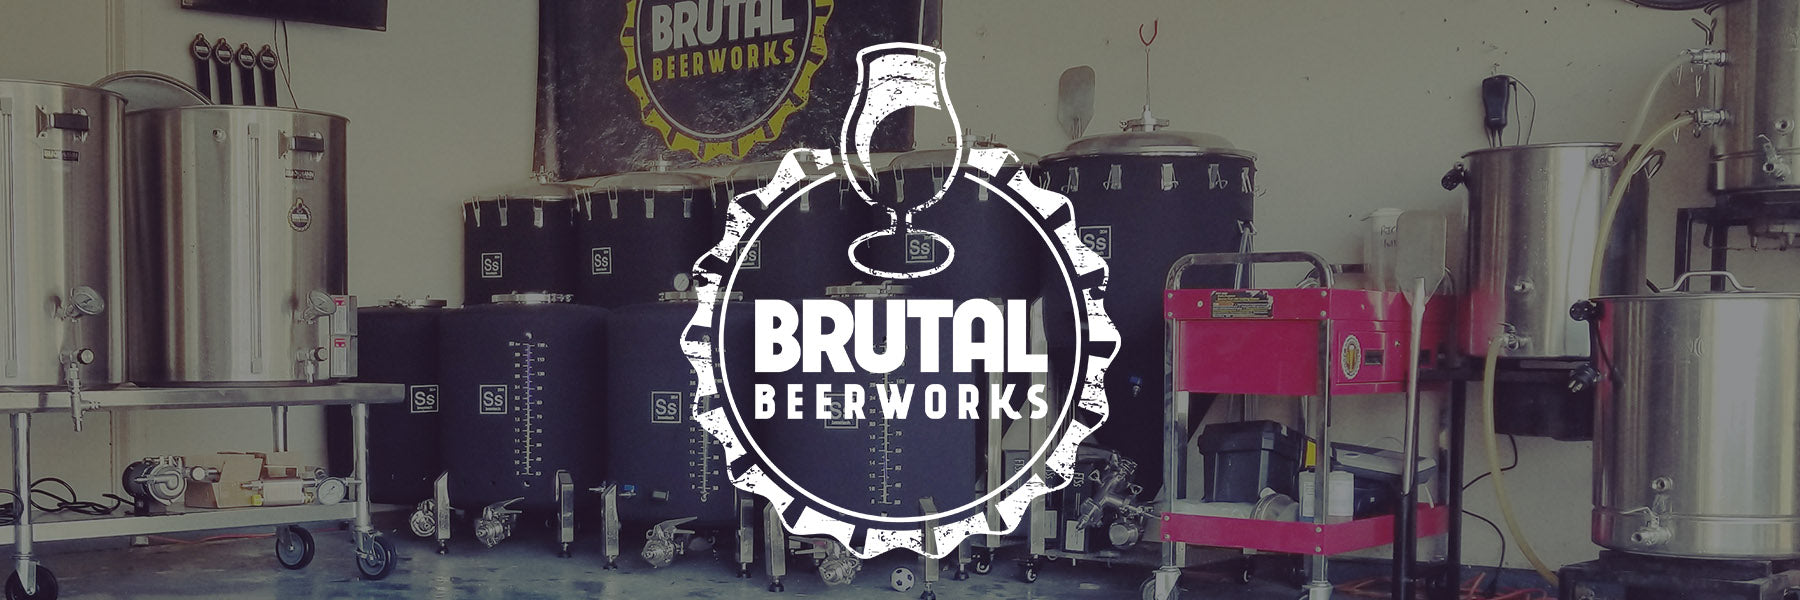 Brutal Beerworks | North Richland Hills, Texas